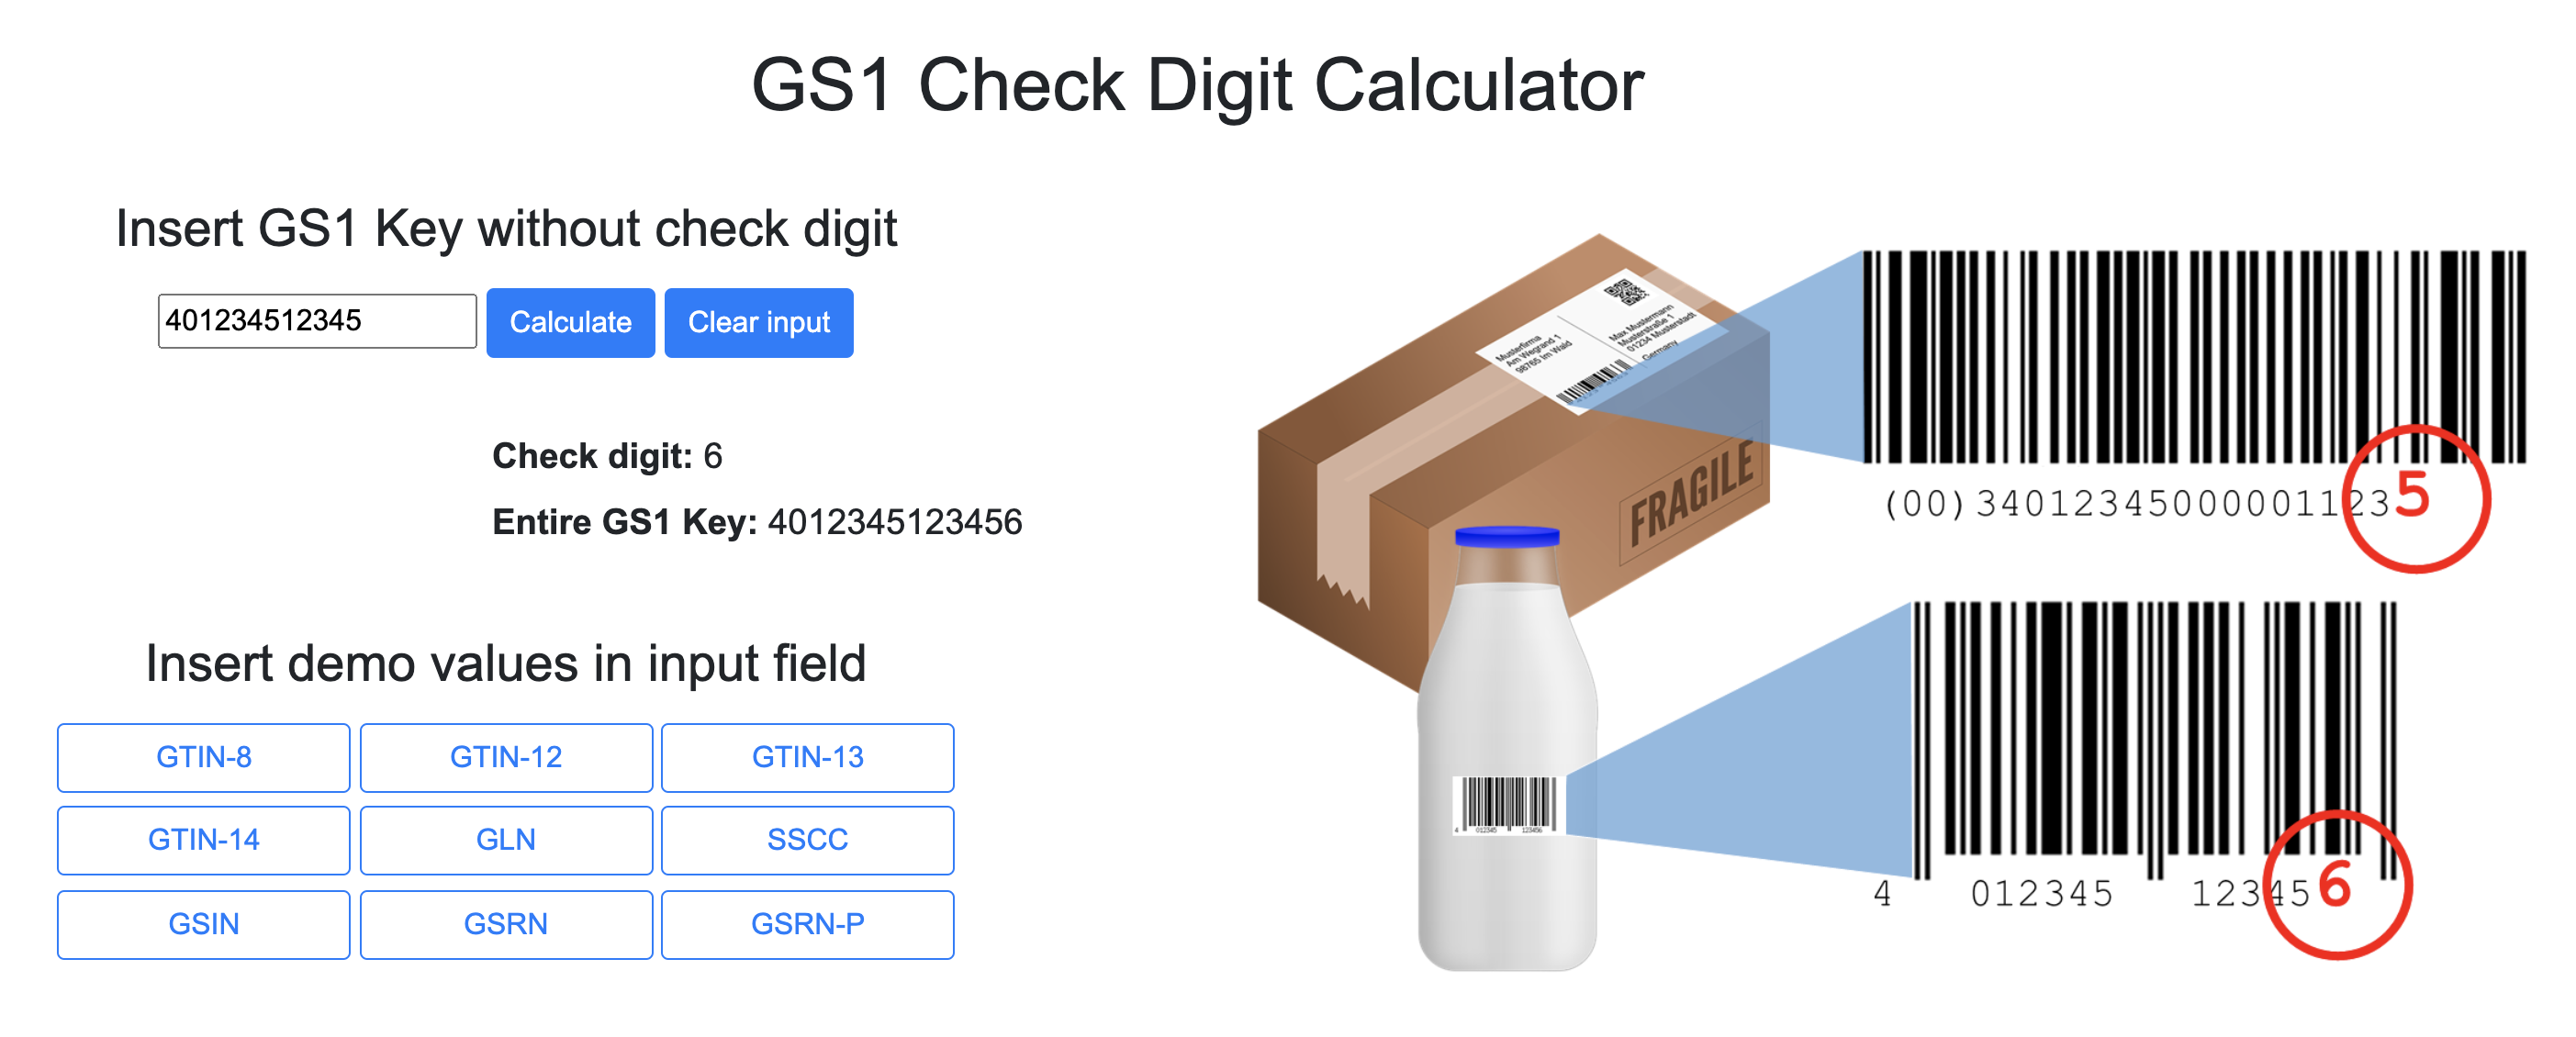 GS1 Check Digit Calculator Demo Tool 